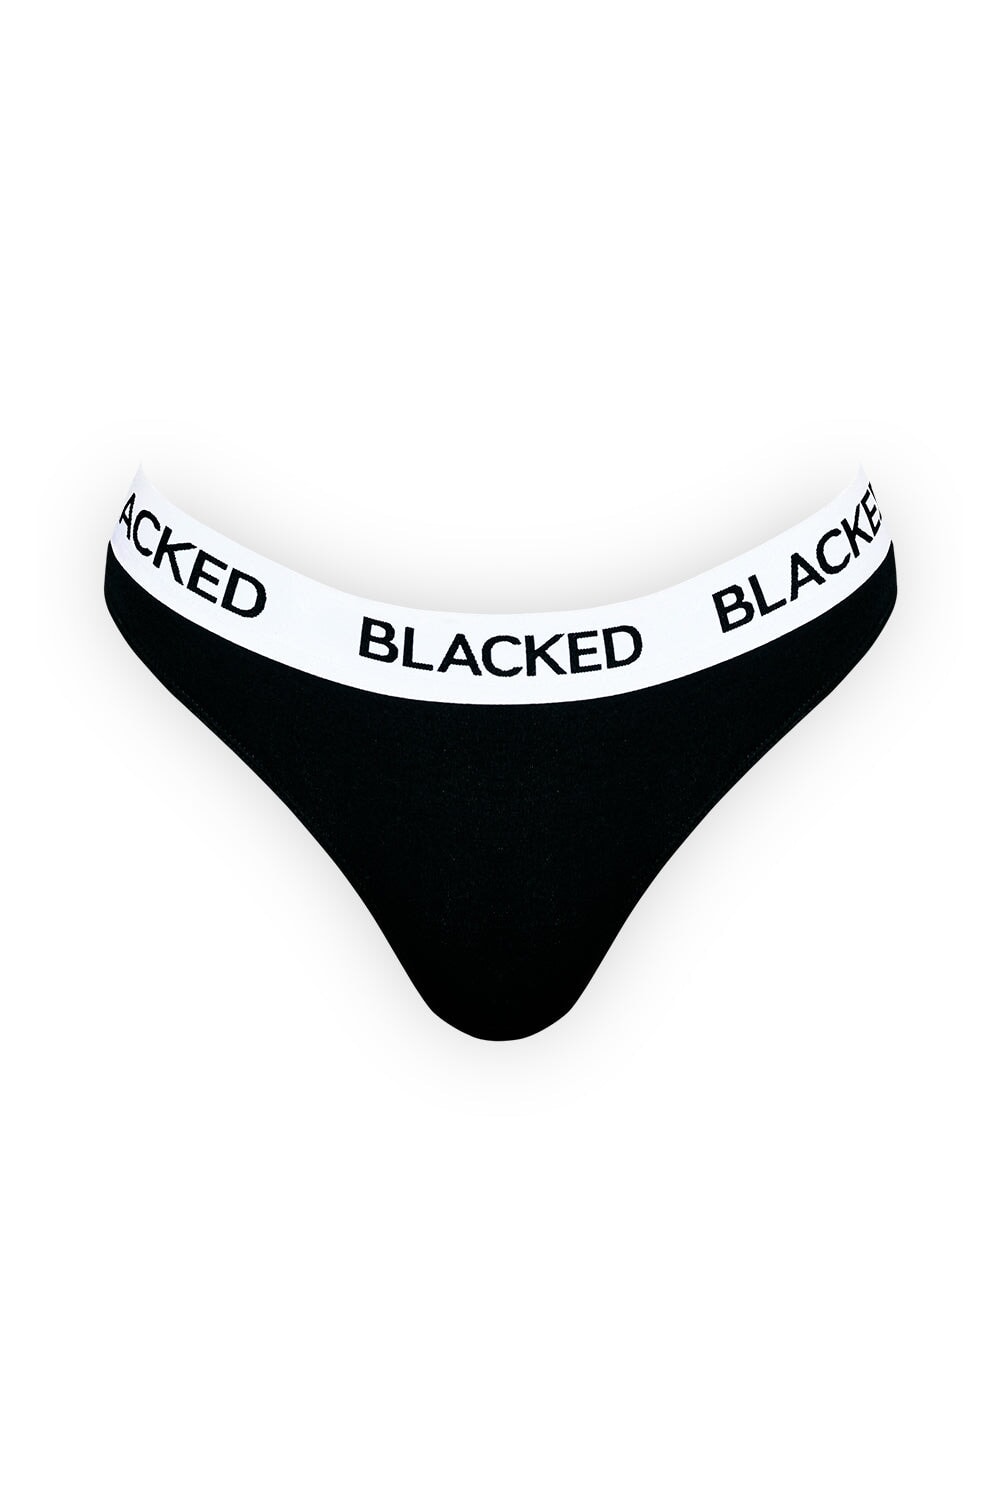 Blacked - Vixen Brand